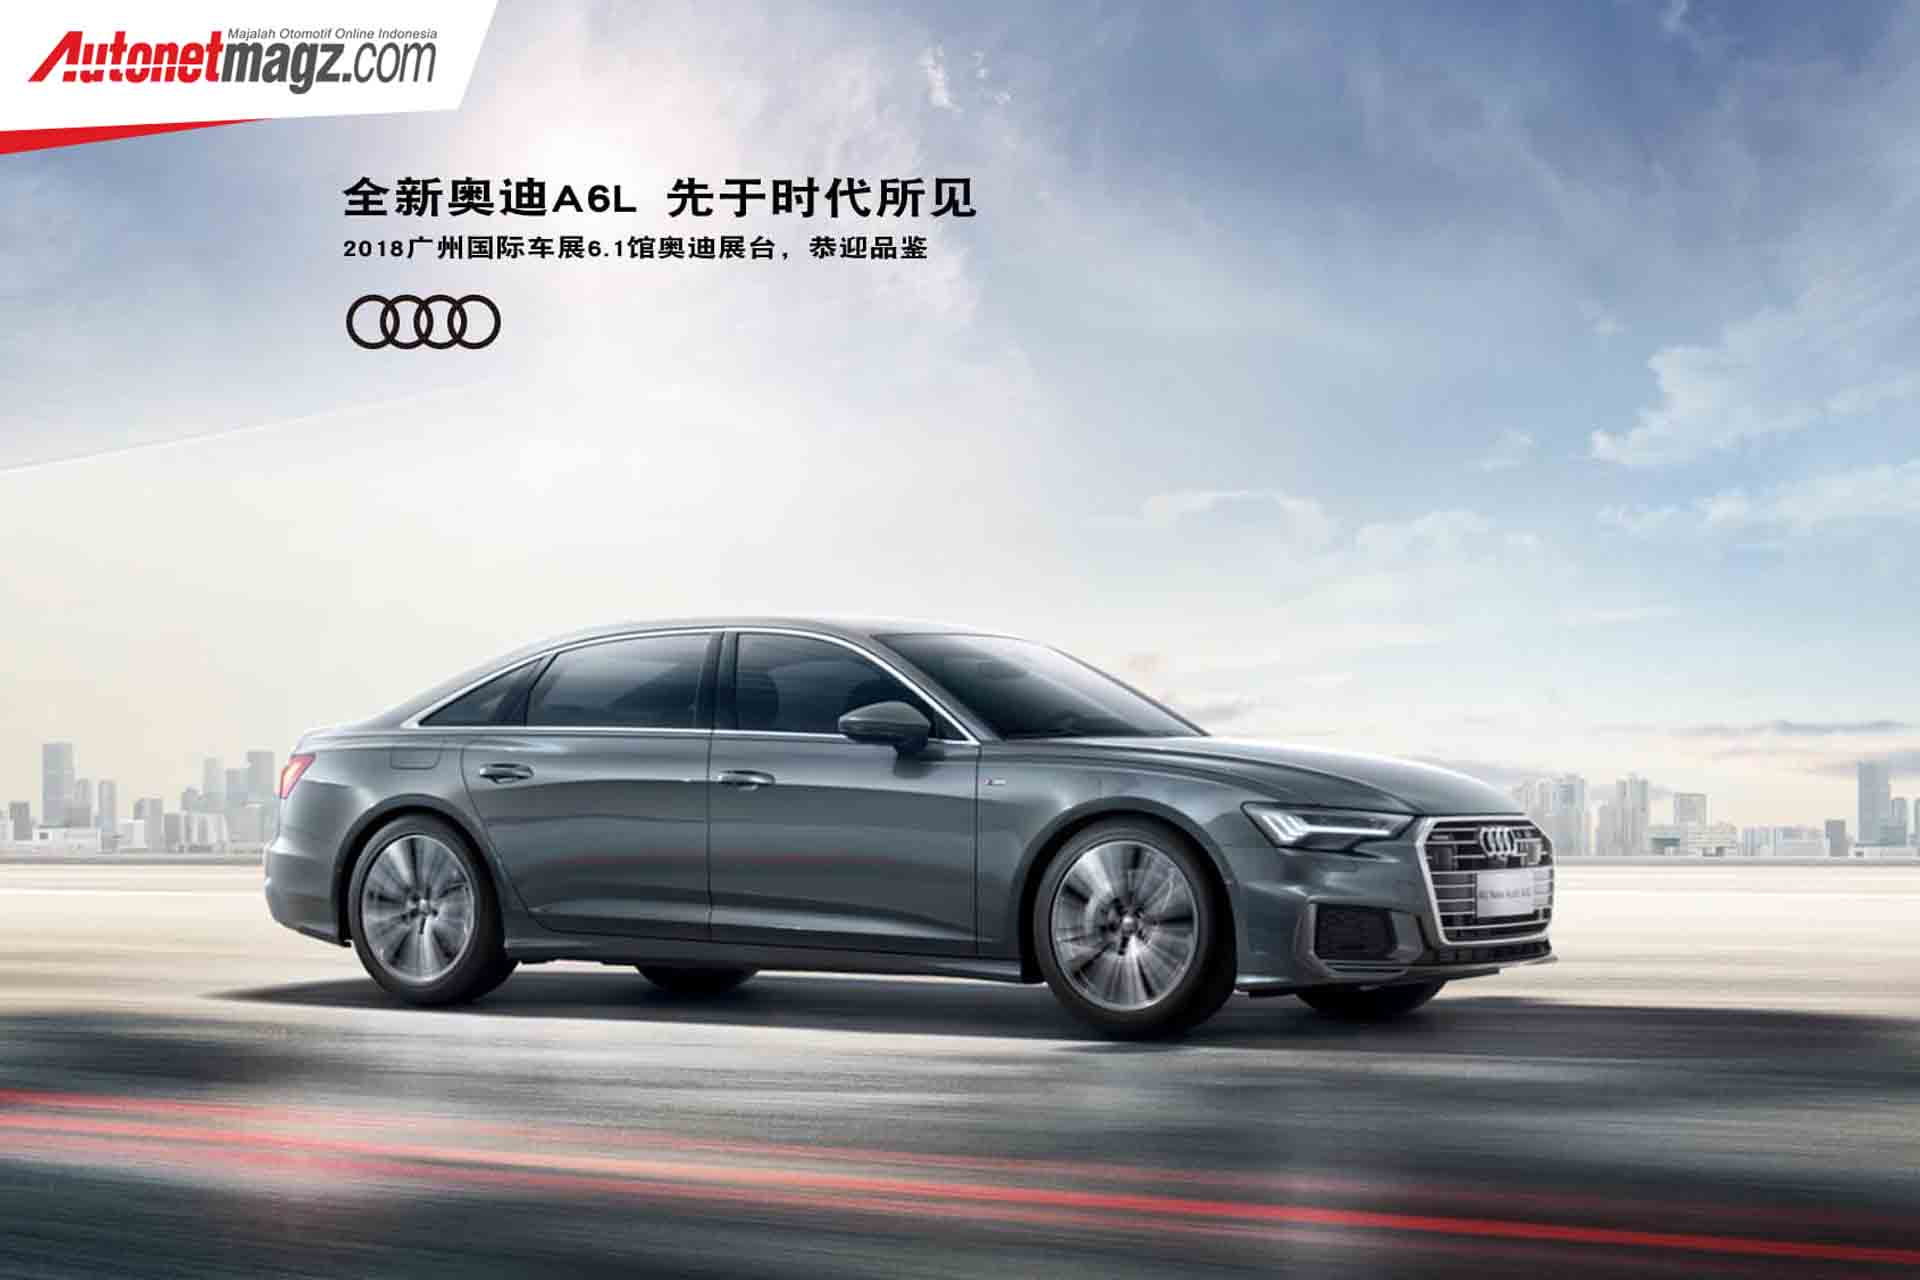 Audi, Audi A6L: Audi Rilis Audi A6 Versi Long Wheelbase di China